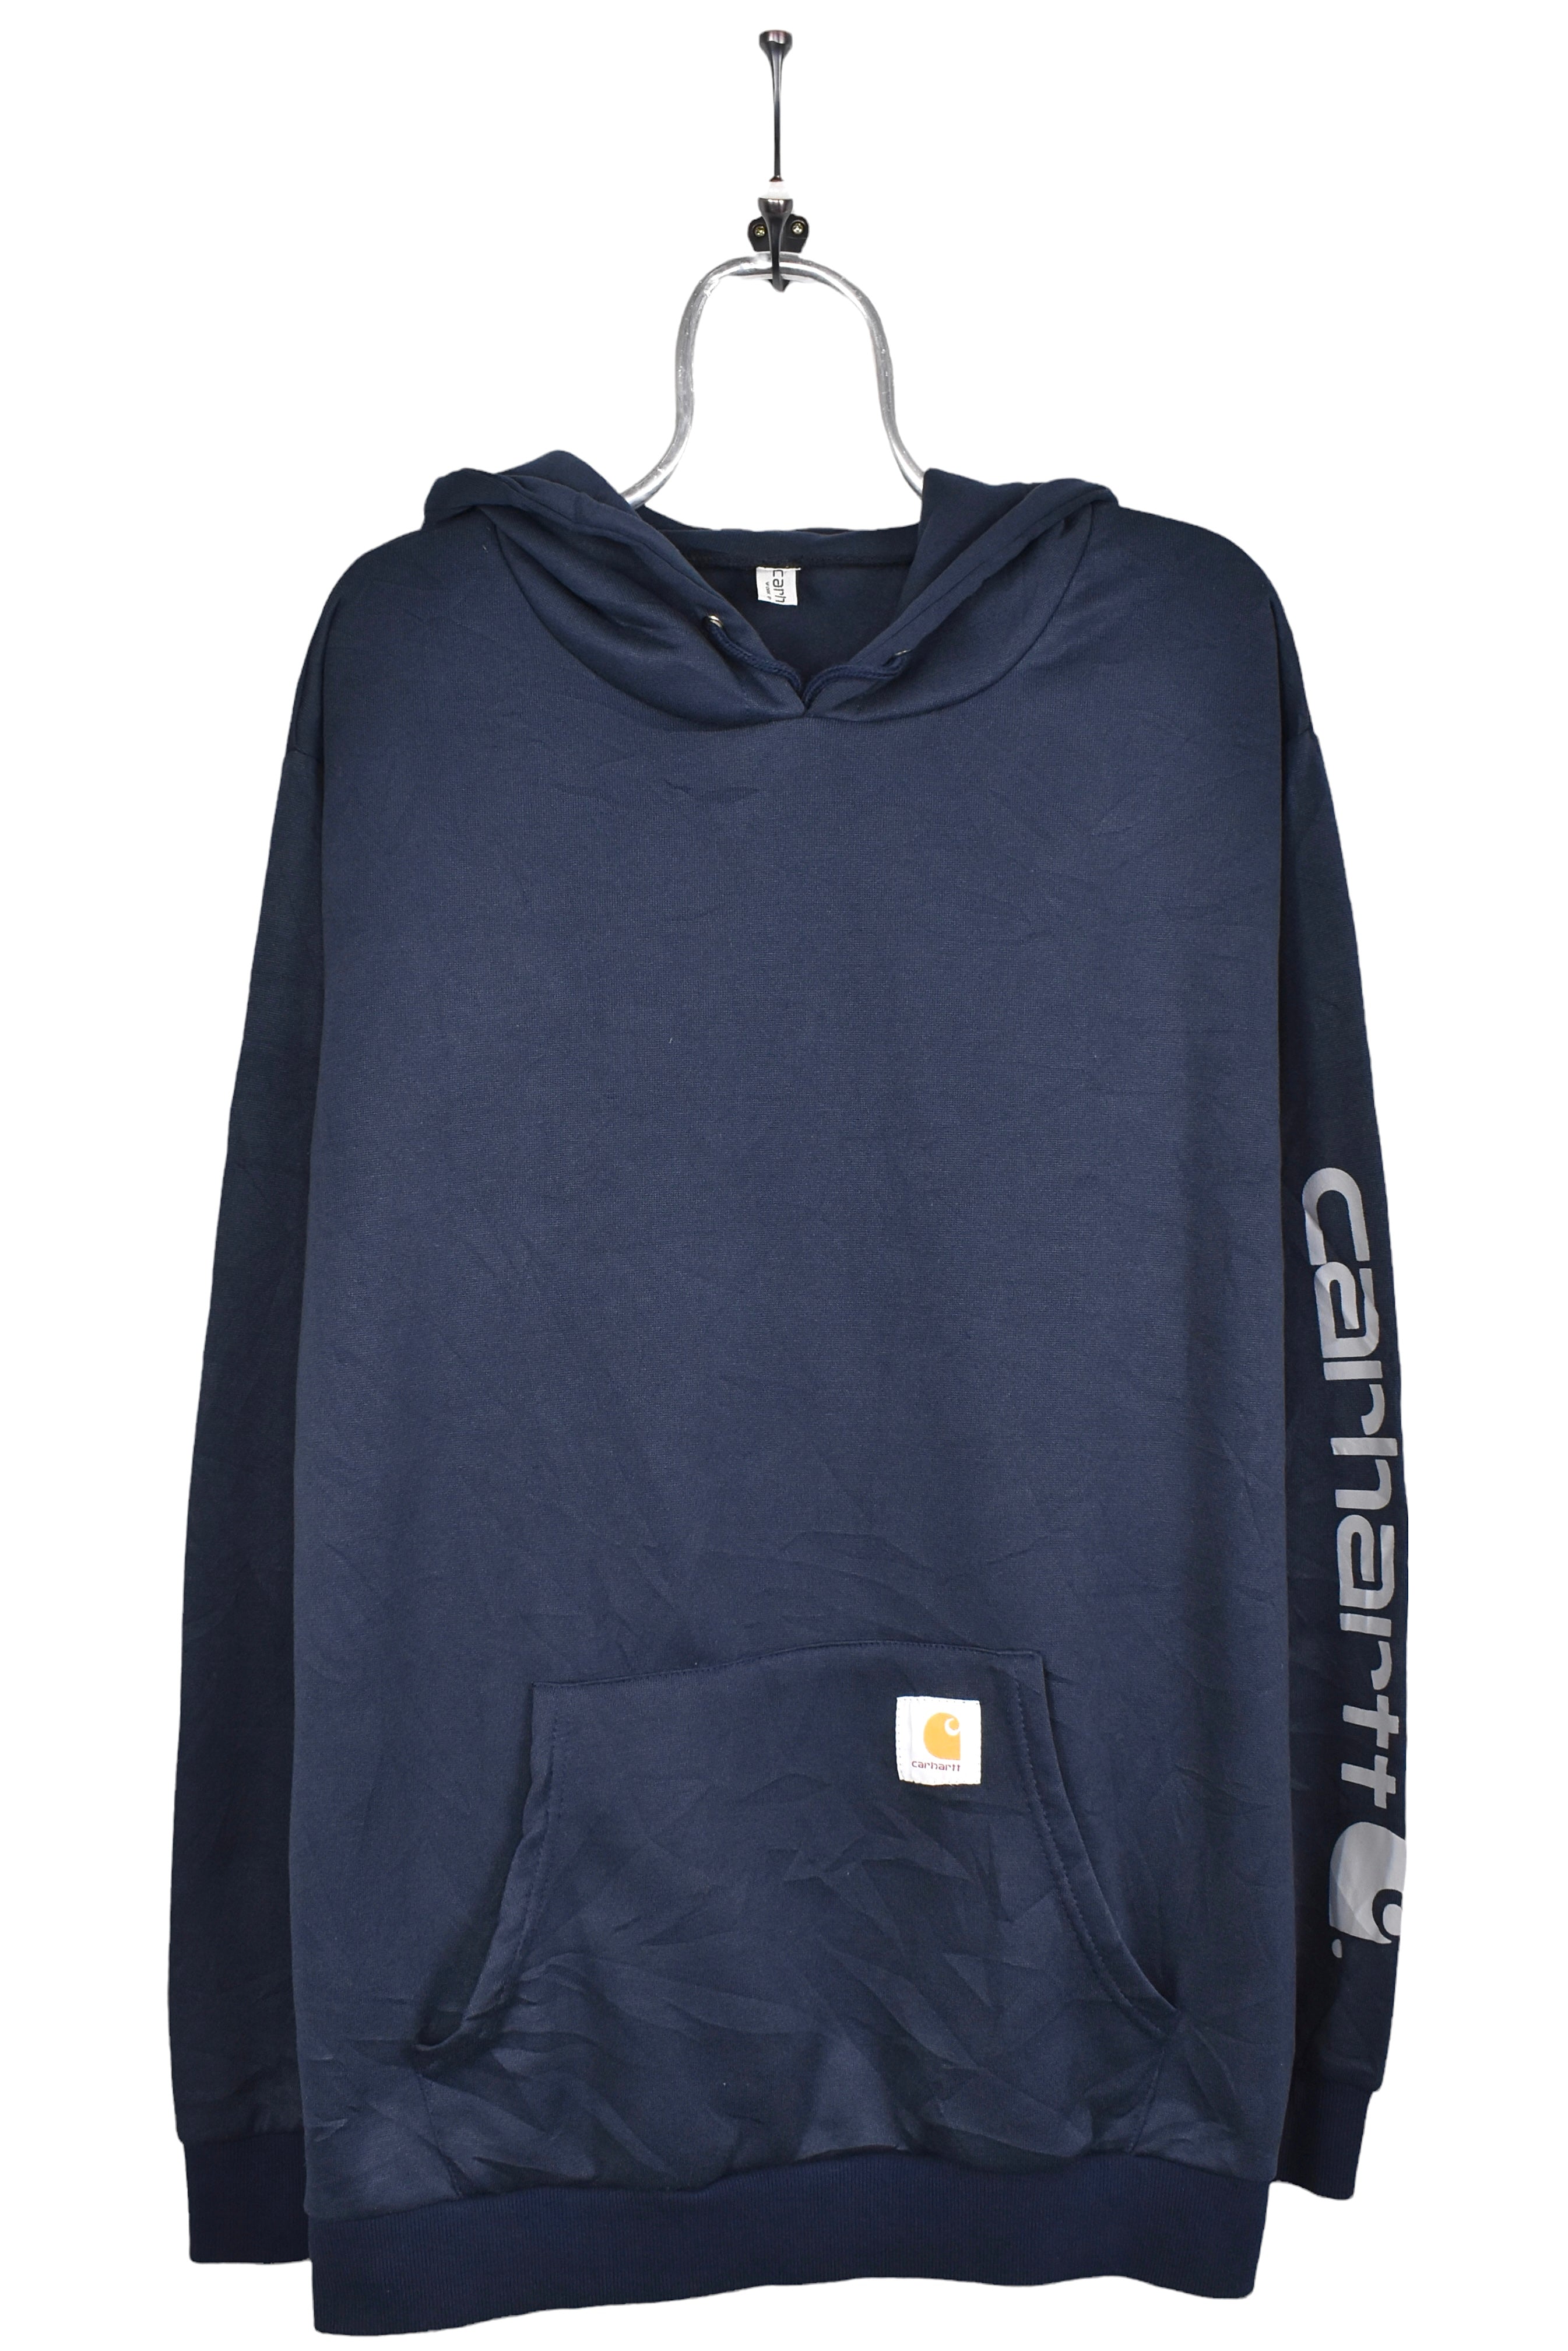 Modern Carhartt hoodie, navy blue graphic sweatshirt - AU XL CARHARTT